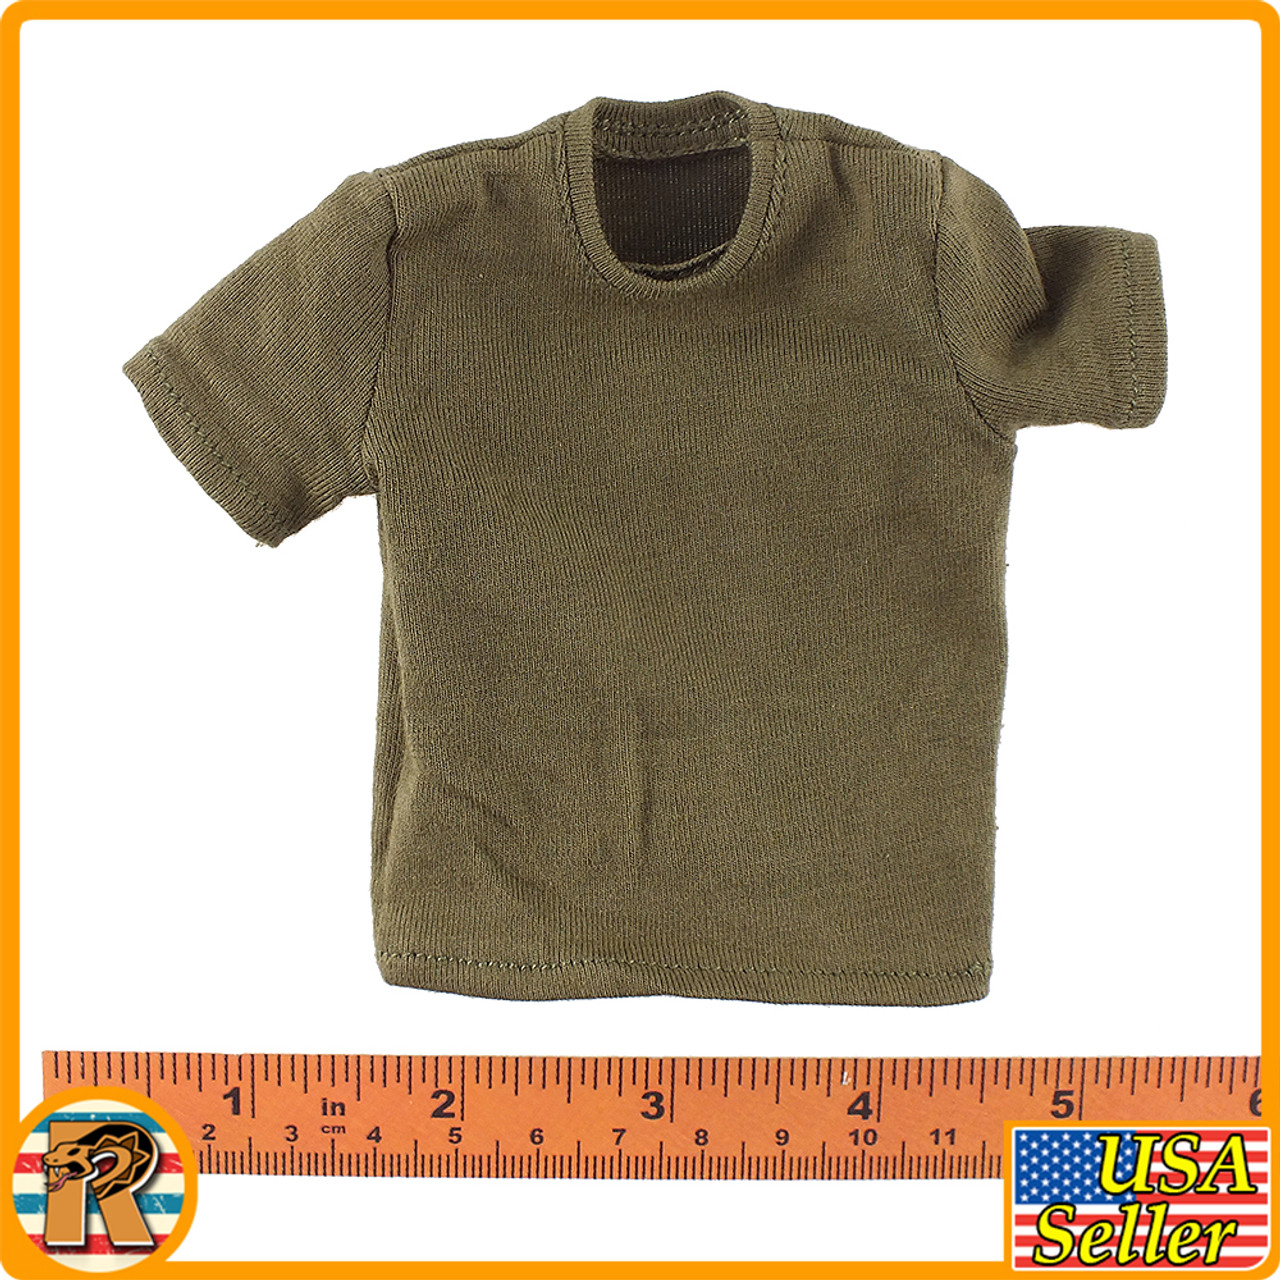 Scott Urban Warrior '99 - T Shirt - 1/6 Scale -